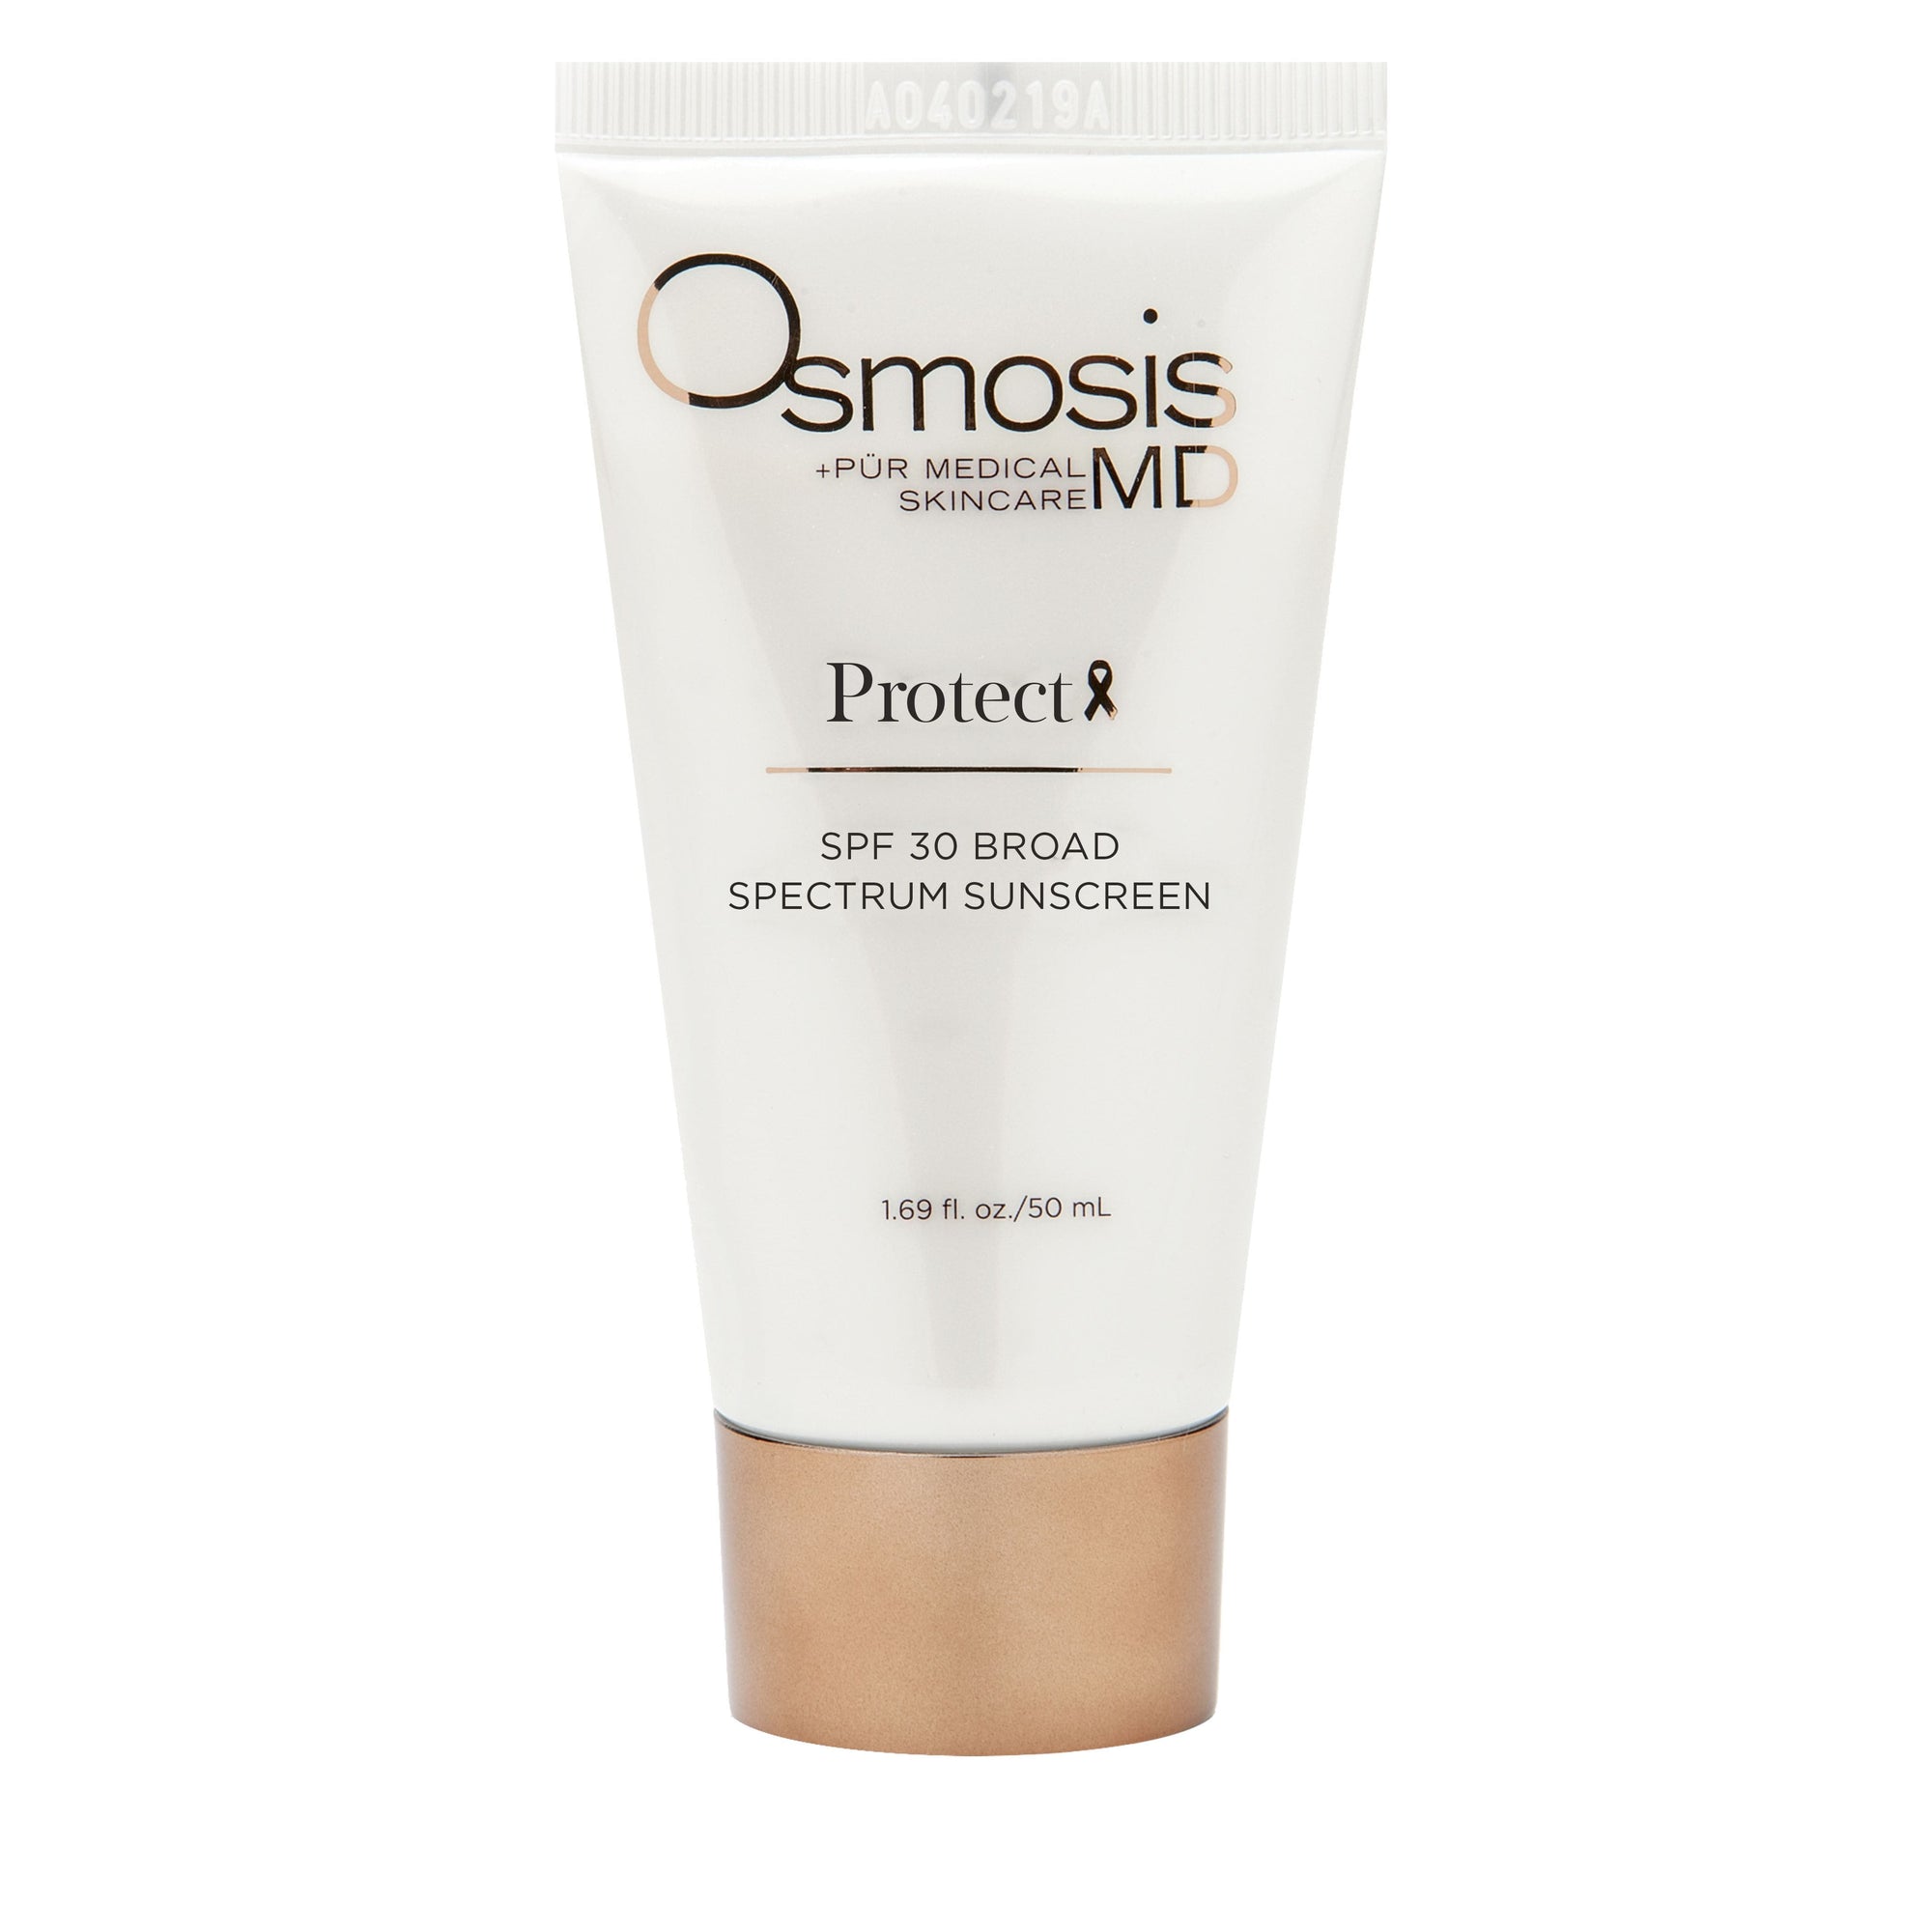 Osmosis MD Protect SPF 30 Sunscreen 1.69 fl oz